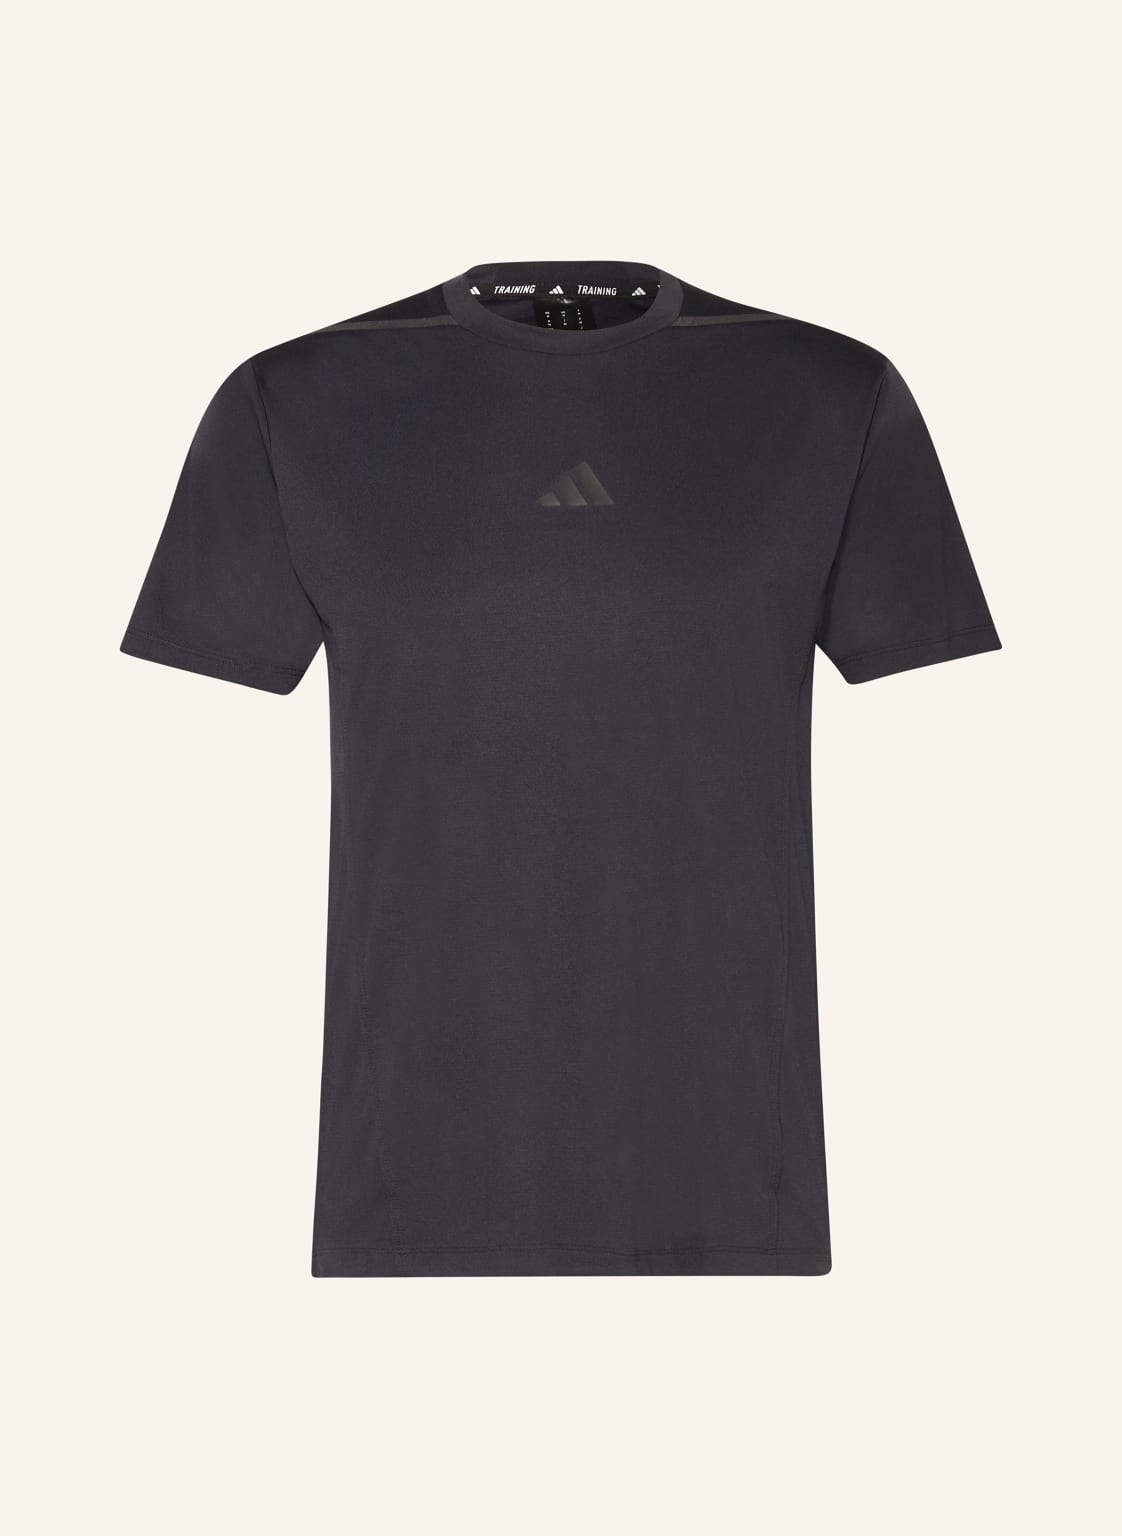 Adidas T-Shirt Designed For Training Adistrong schwarz von Adidas